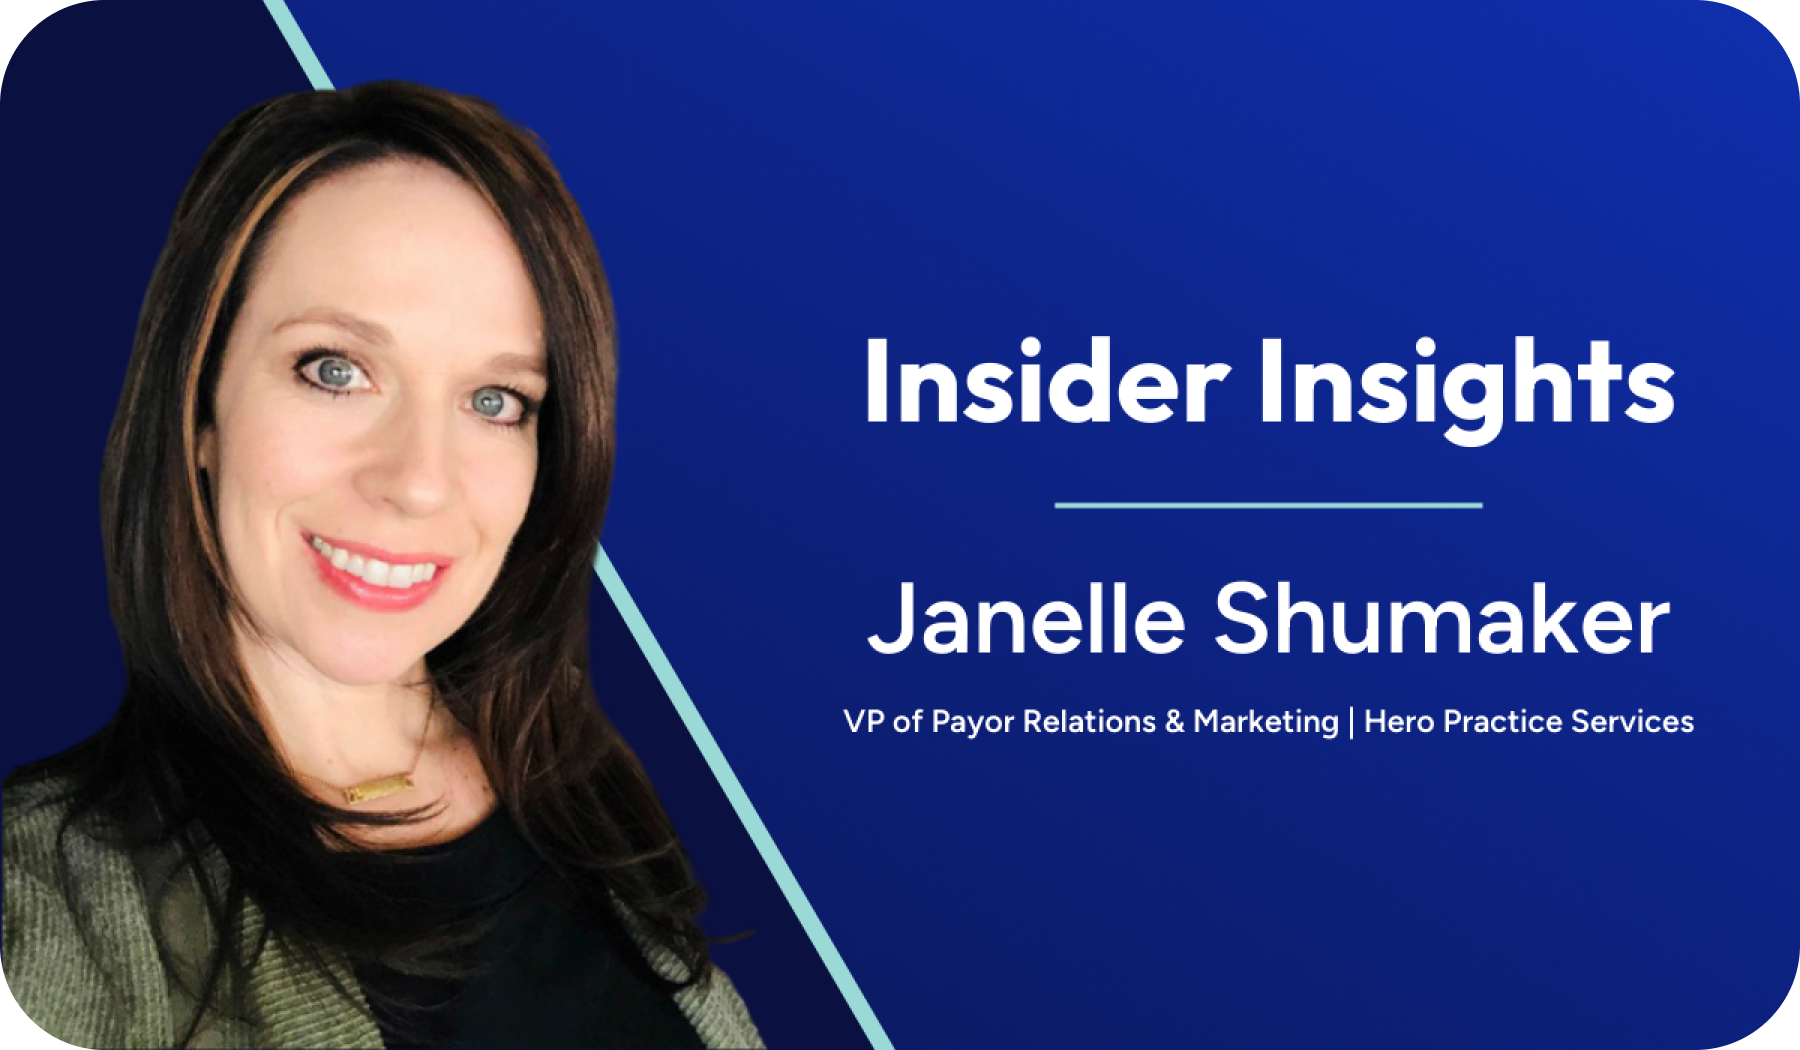 Janelle Shumaker, VP of Payor Relations & Marketing, Hero Practice Services